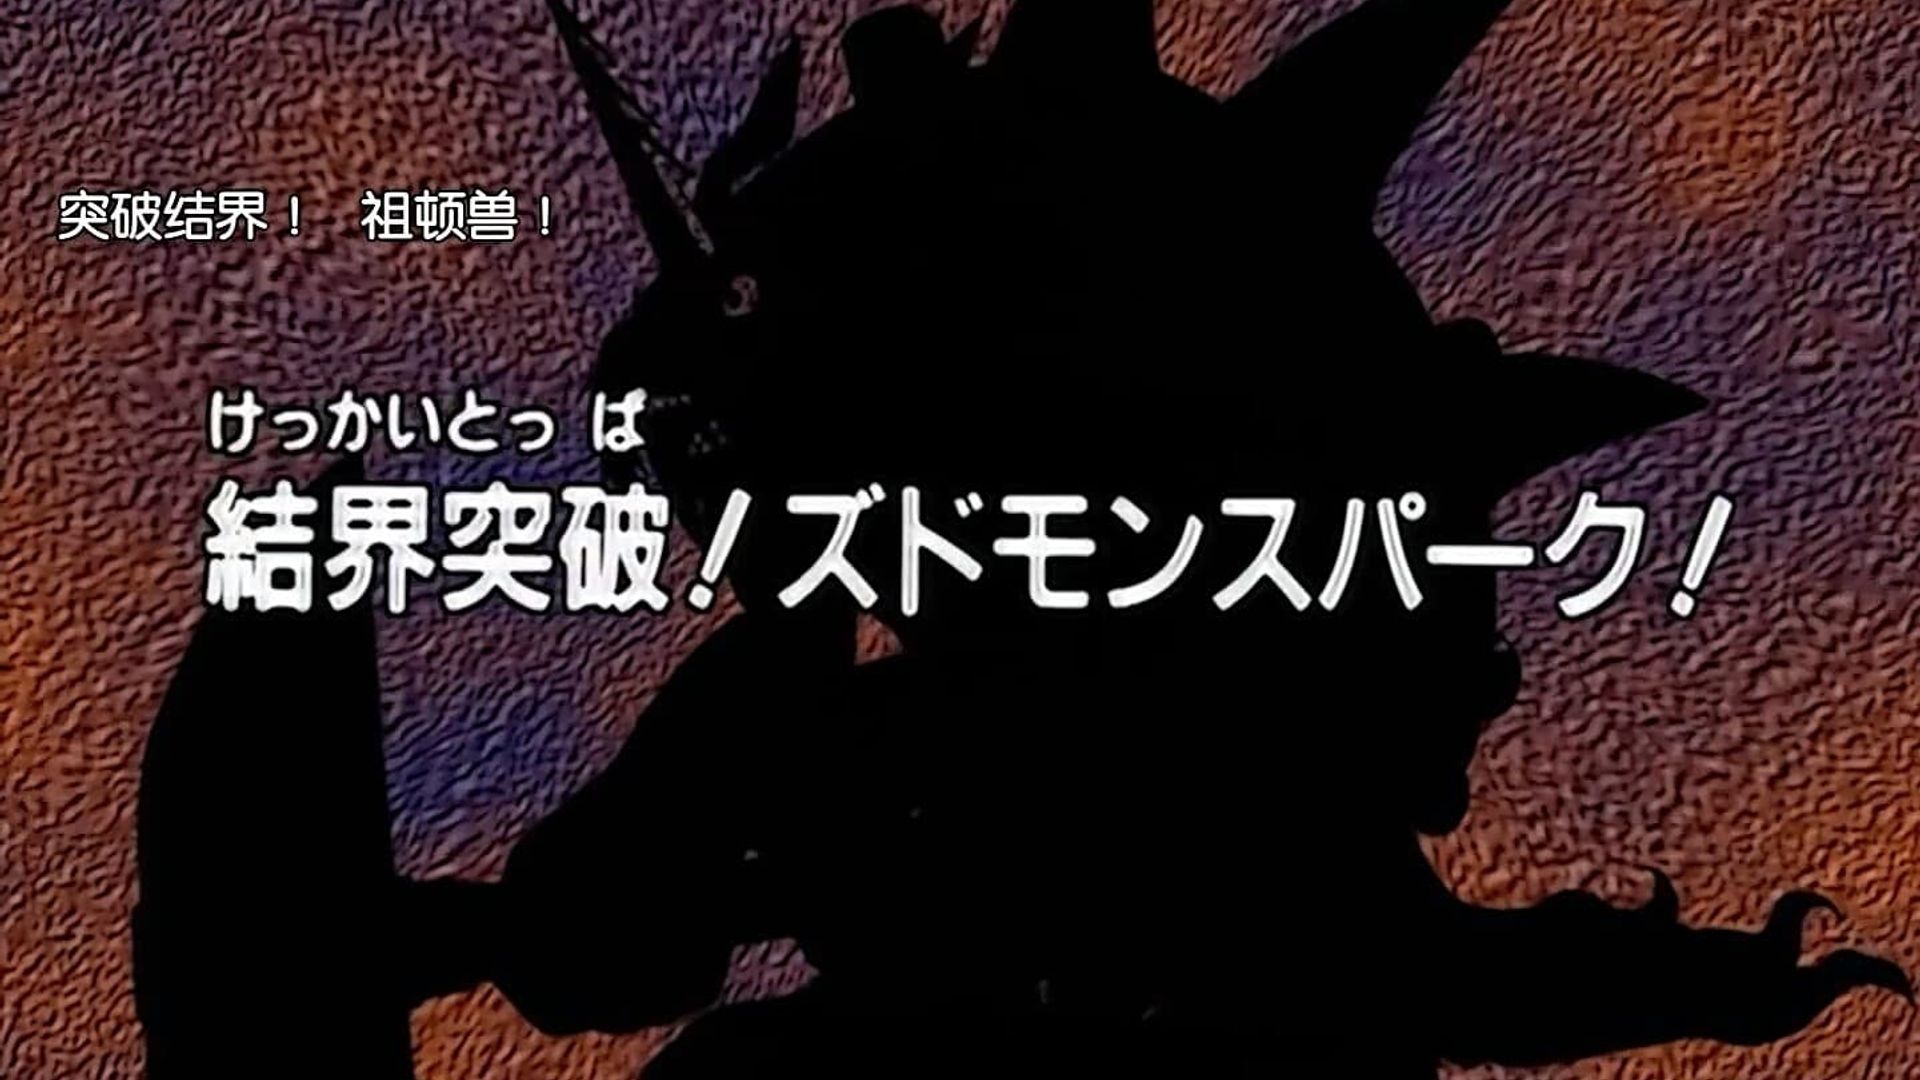 Digimon: Digital Monsters background